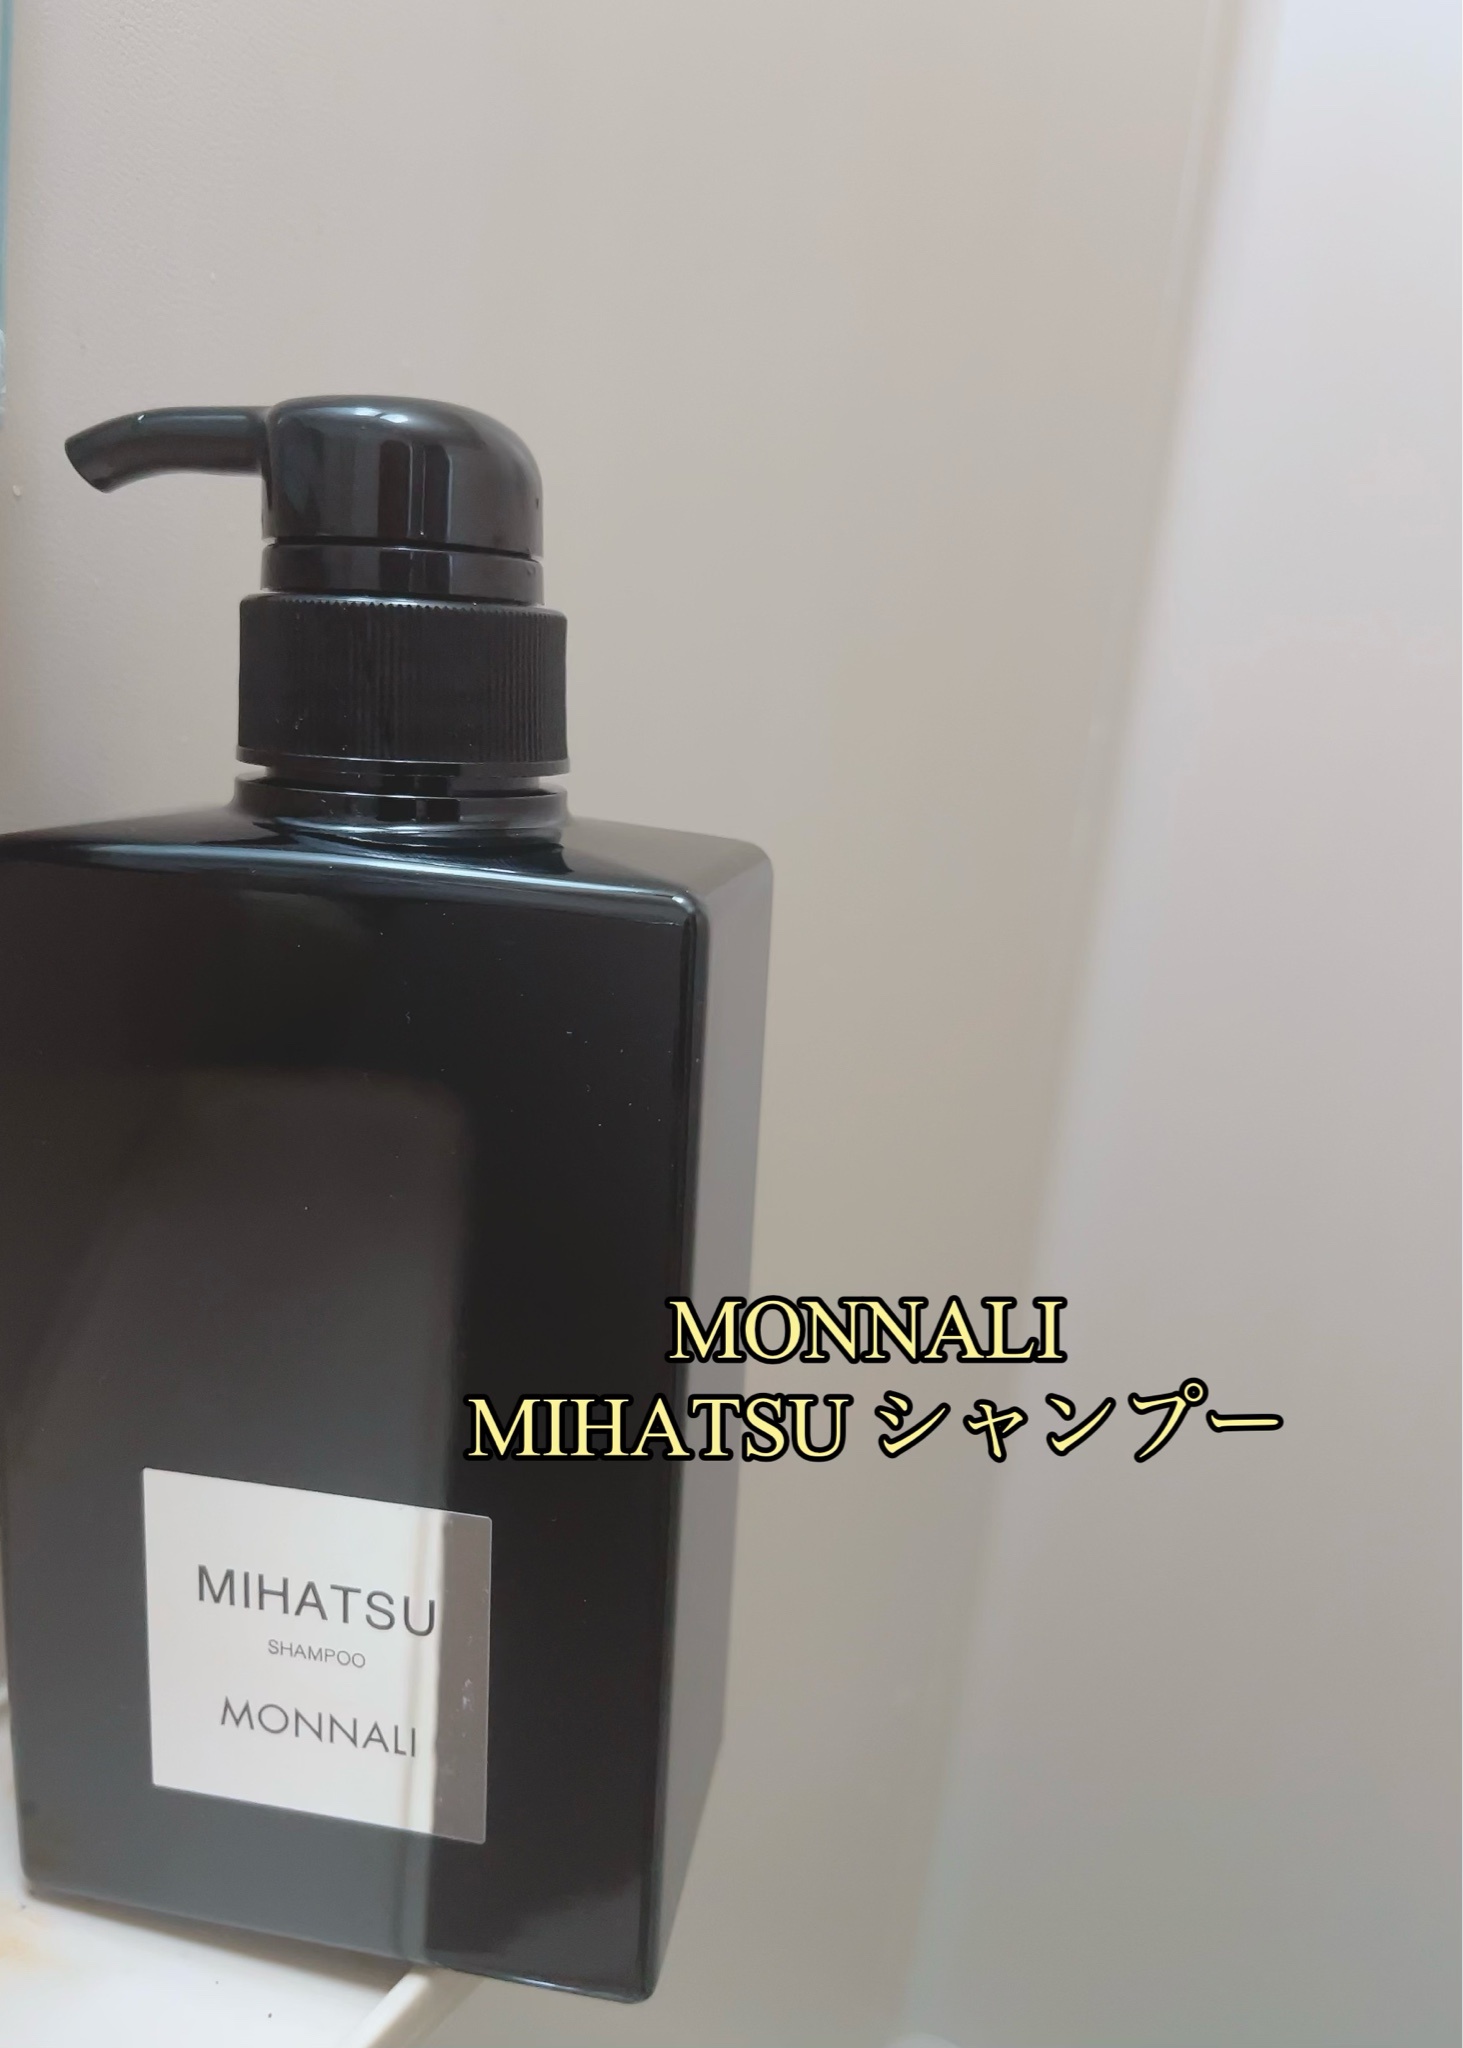 MONNALI モナリ MIHATSU ミハツシャンプー 350ml 日本人気超絶の 